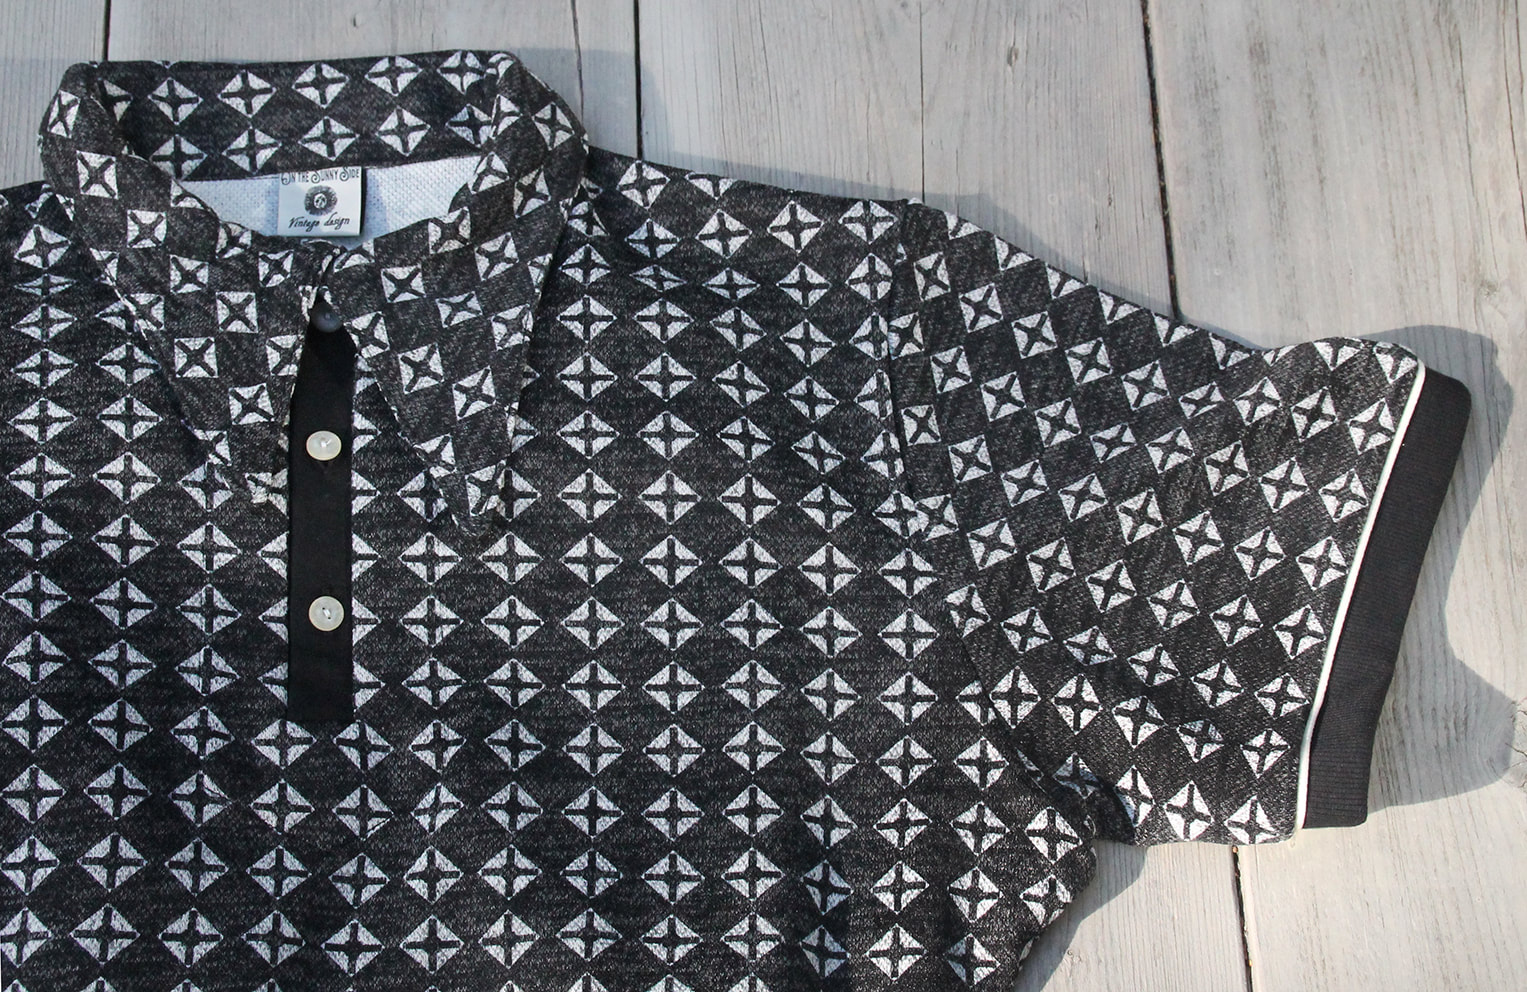 1930s style polo shirt melange star black